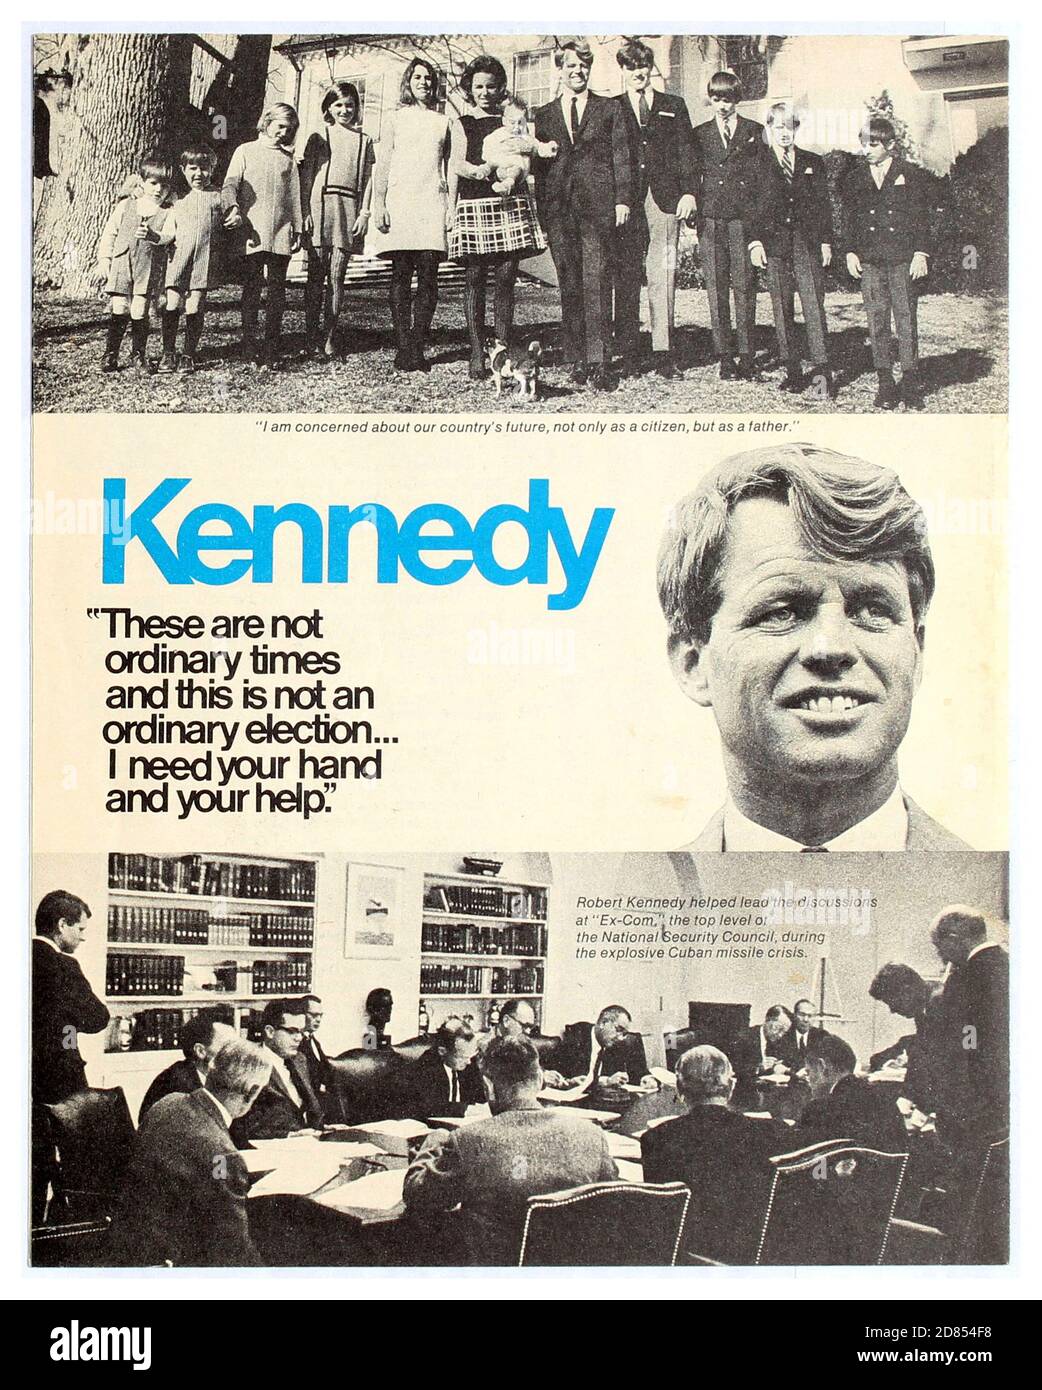 Robert Kennedy 1968 Banque d'image et photos - Alamy